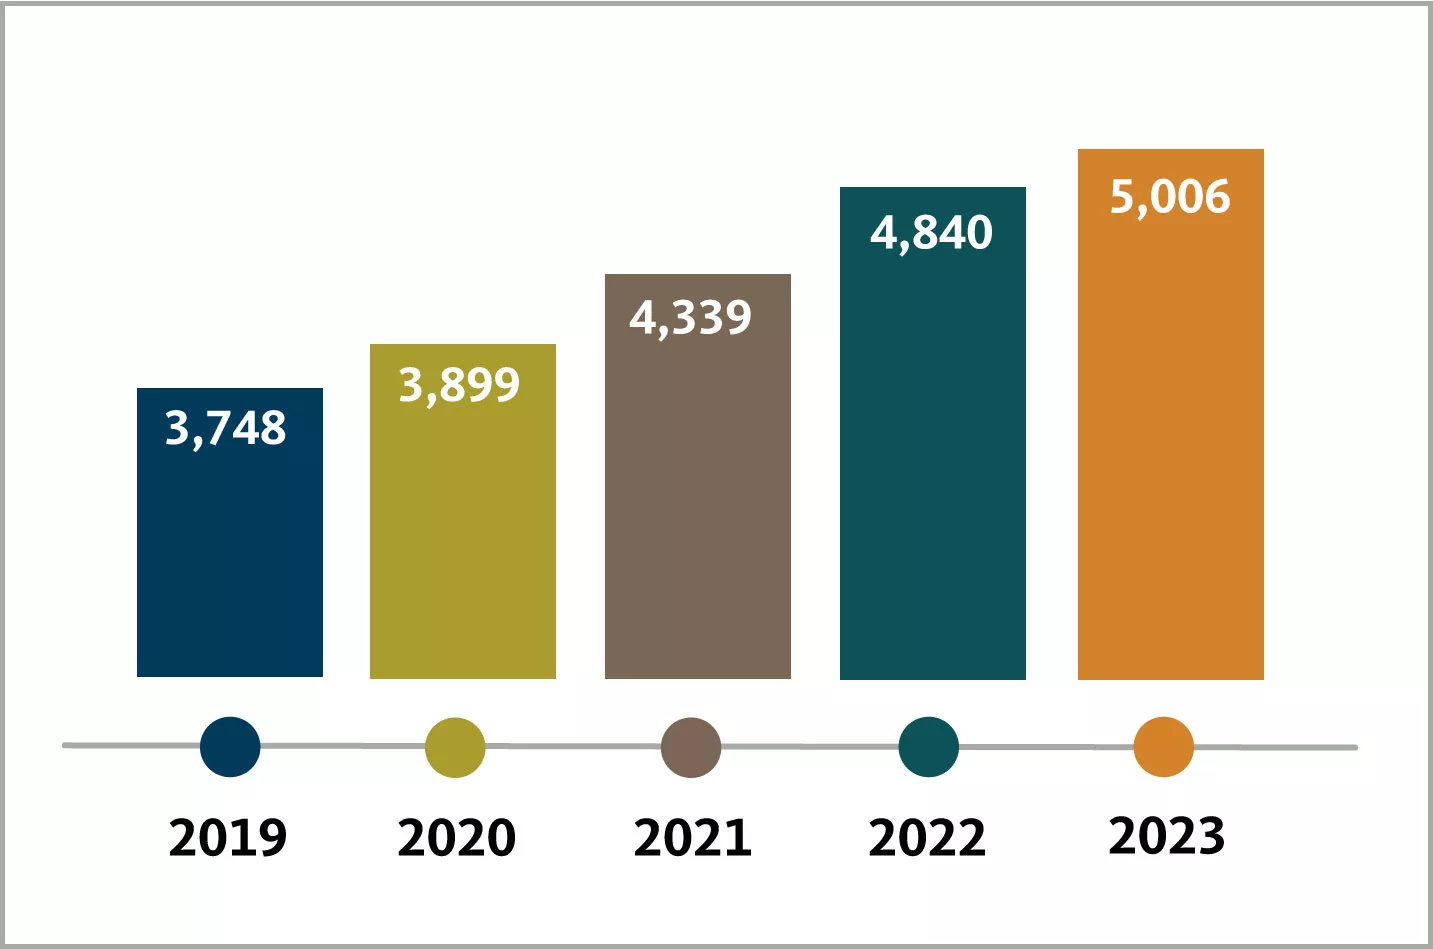 Freshmen enrollment trends last 5 years (2019-2023): 3748, 3899, 4339, 4840, 5006